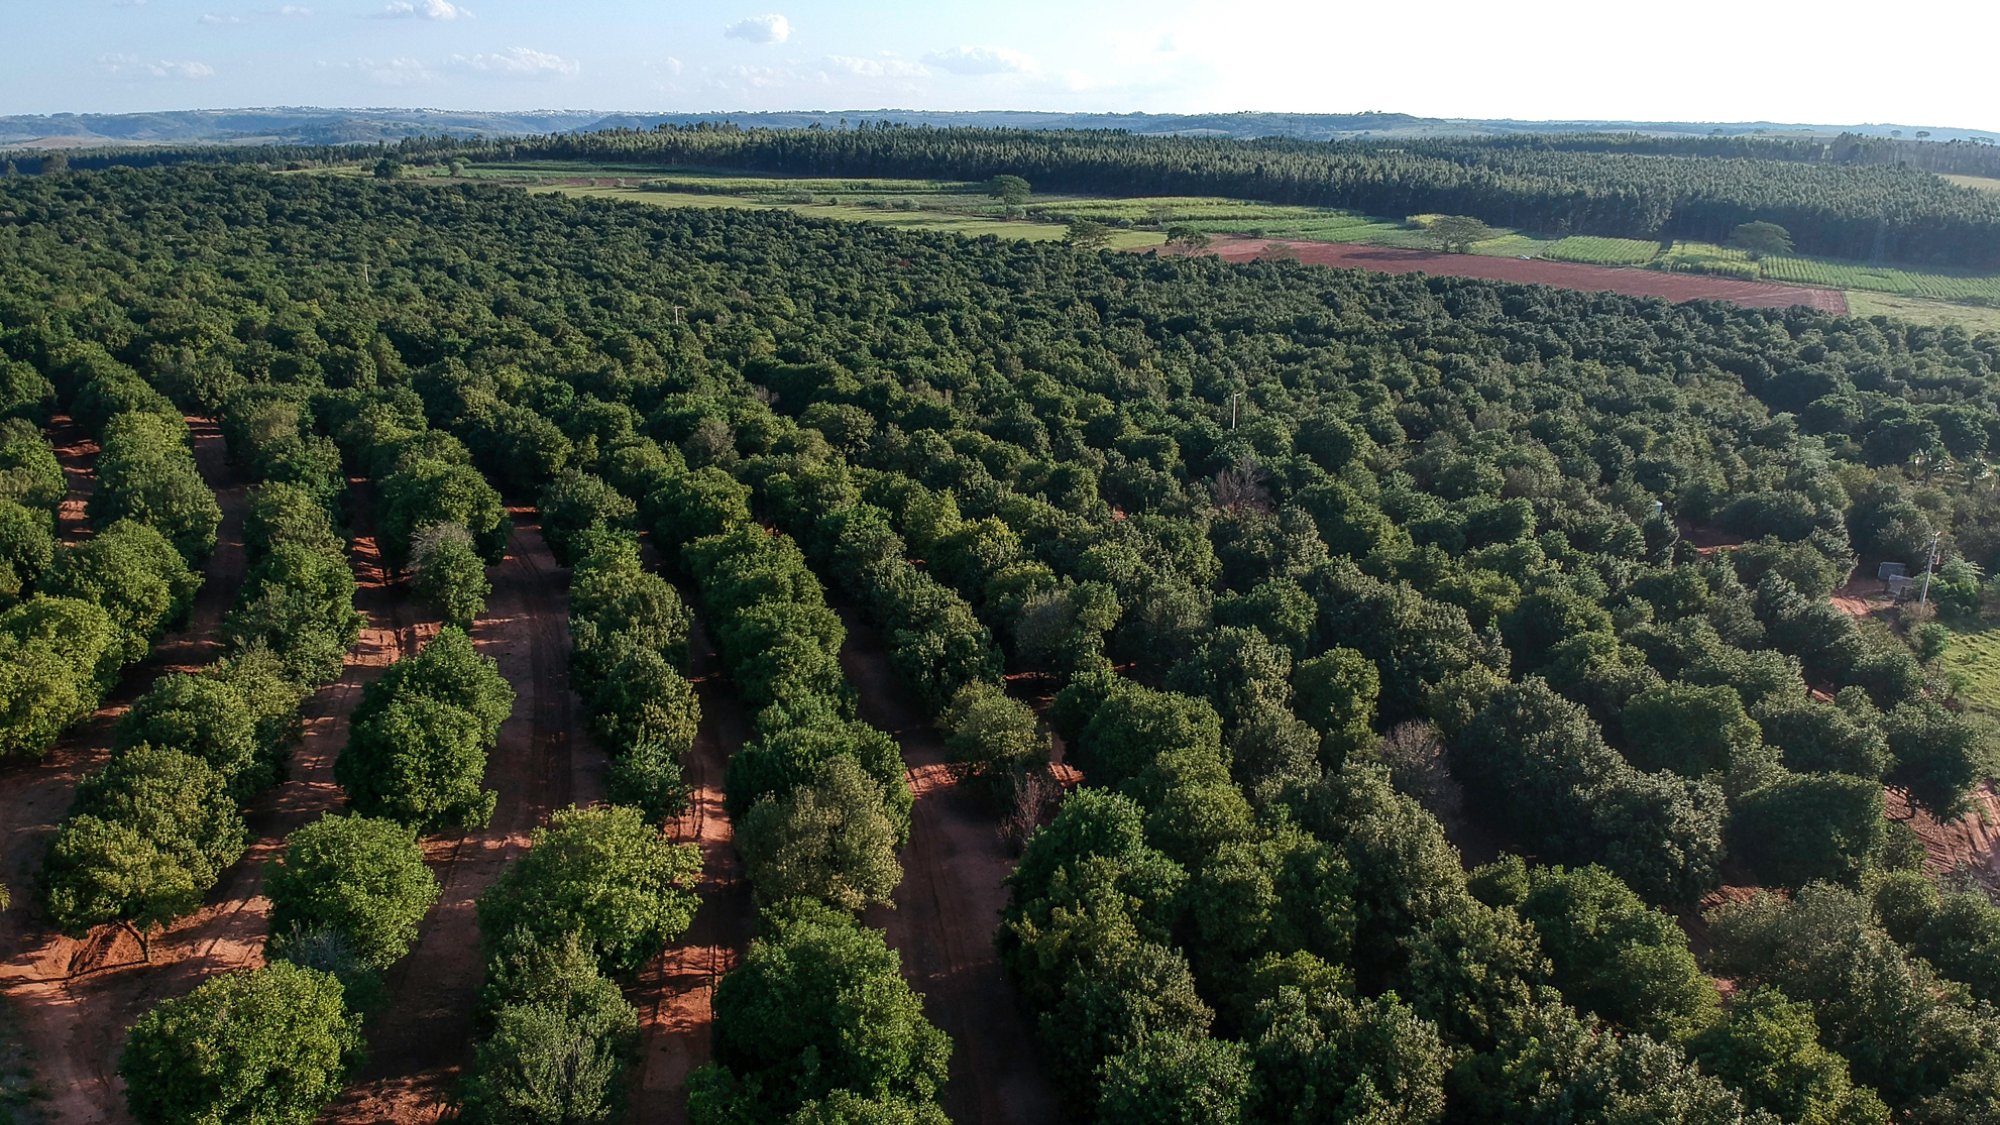 Aerial shot over a macadamia plantation in Brazil